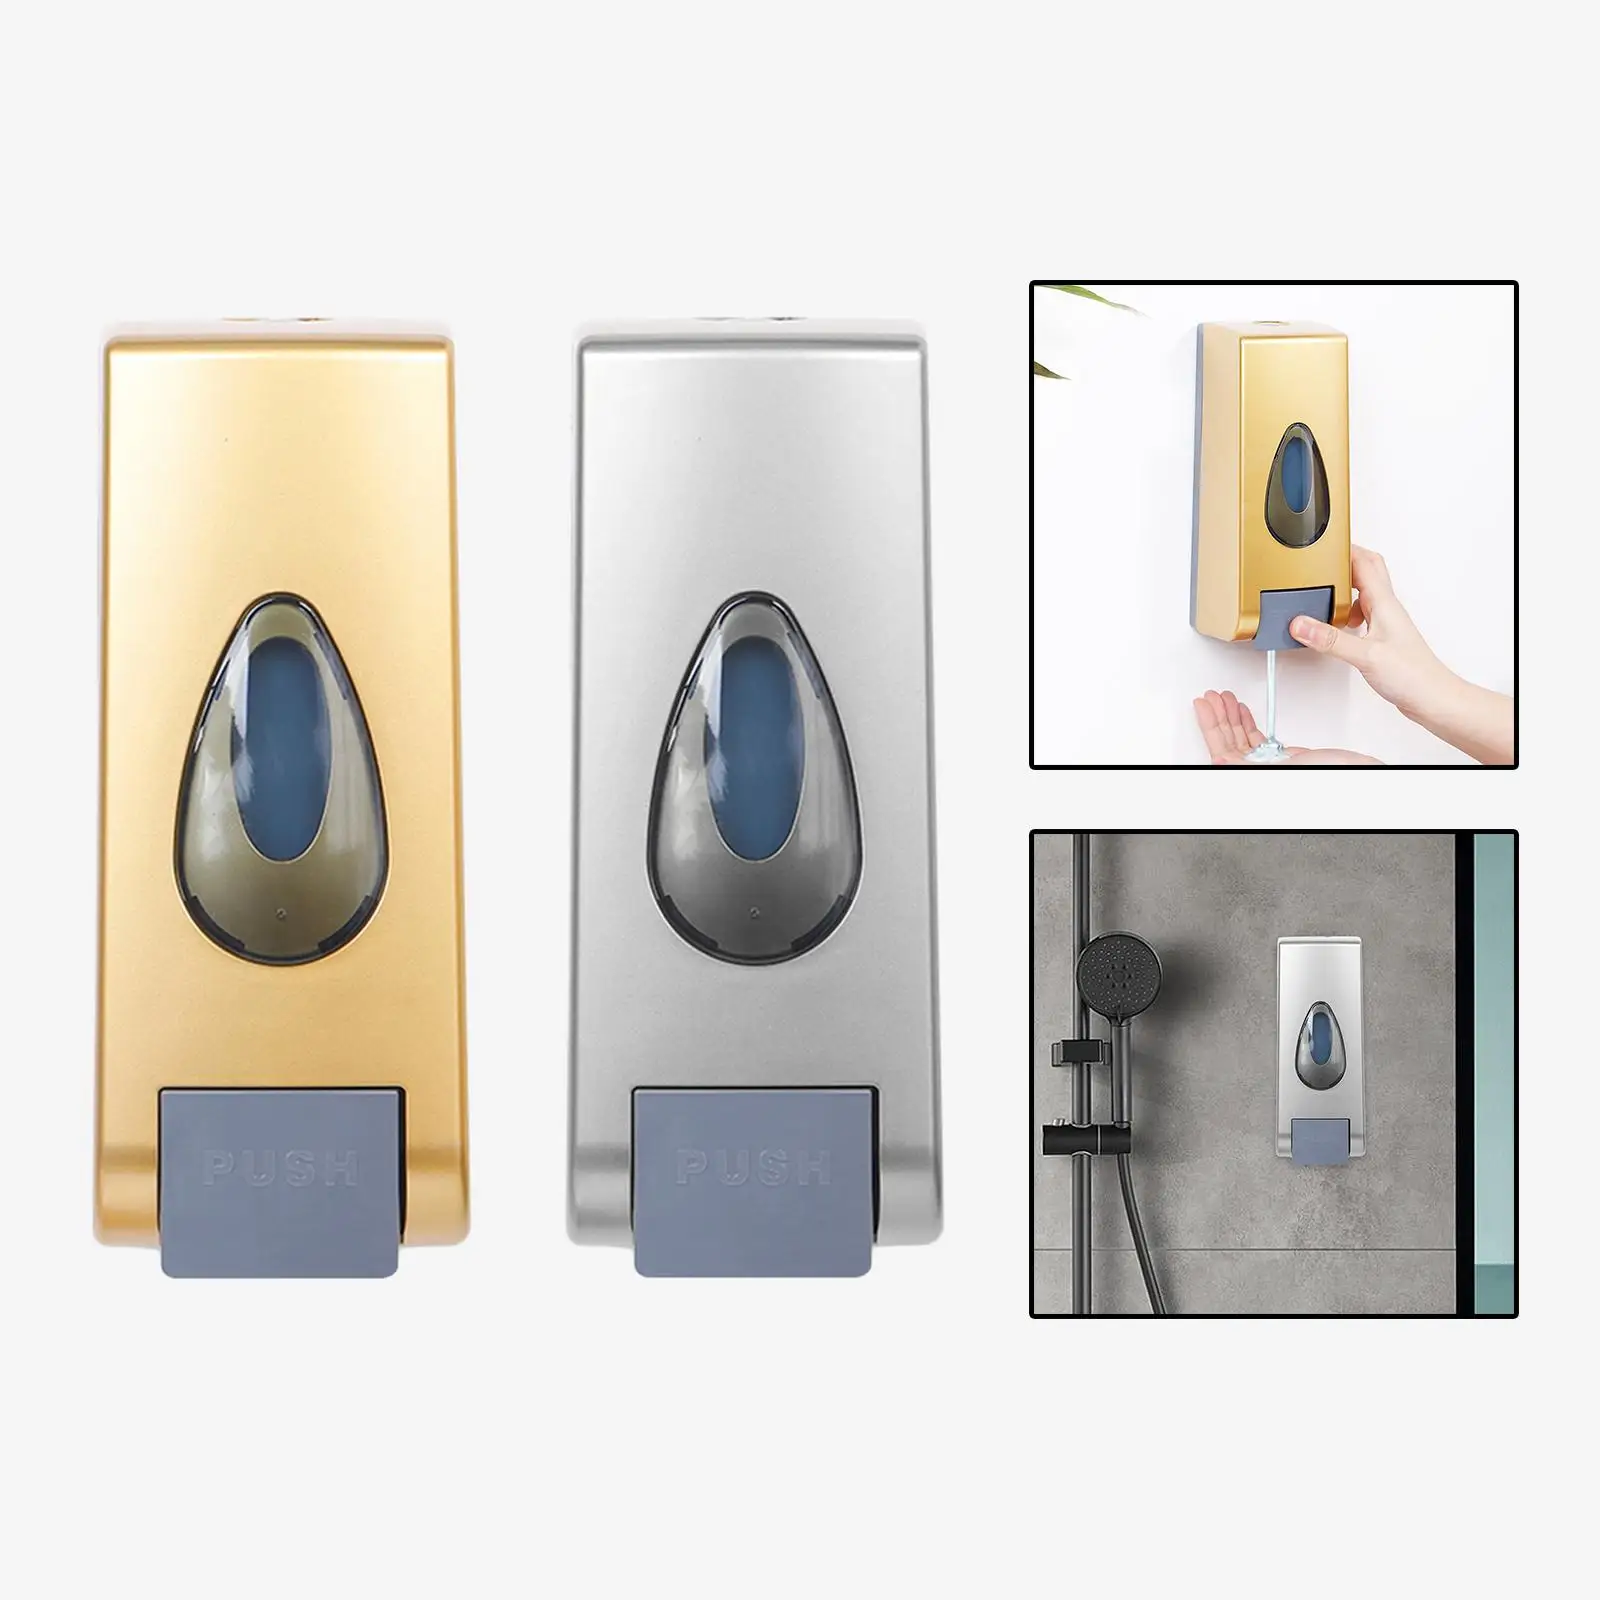 600ml Manual Soap Dispenser Wall Mounted Hand Soap Shampoo Bottle for Bathroom Kitchen Hotels Household Restaurants